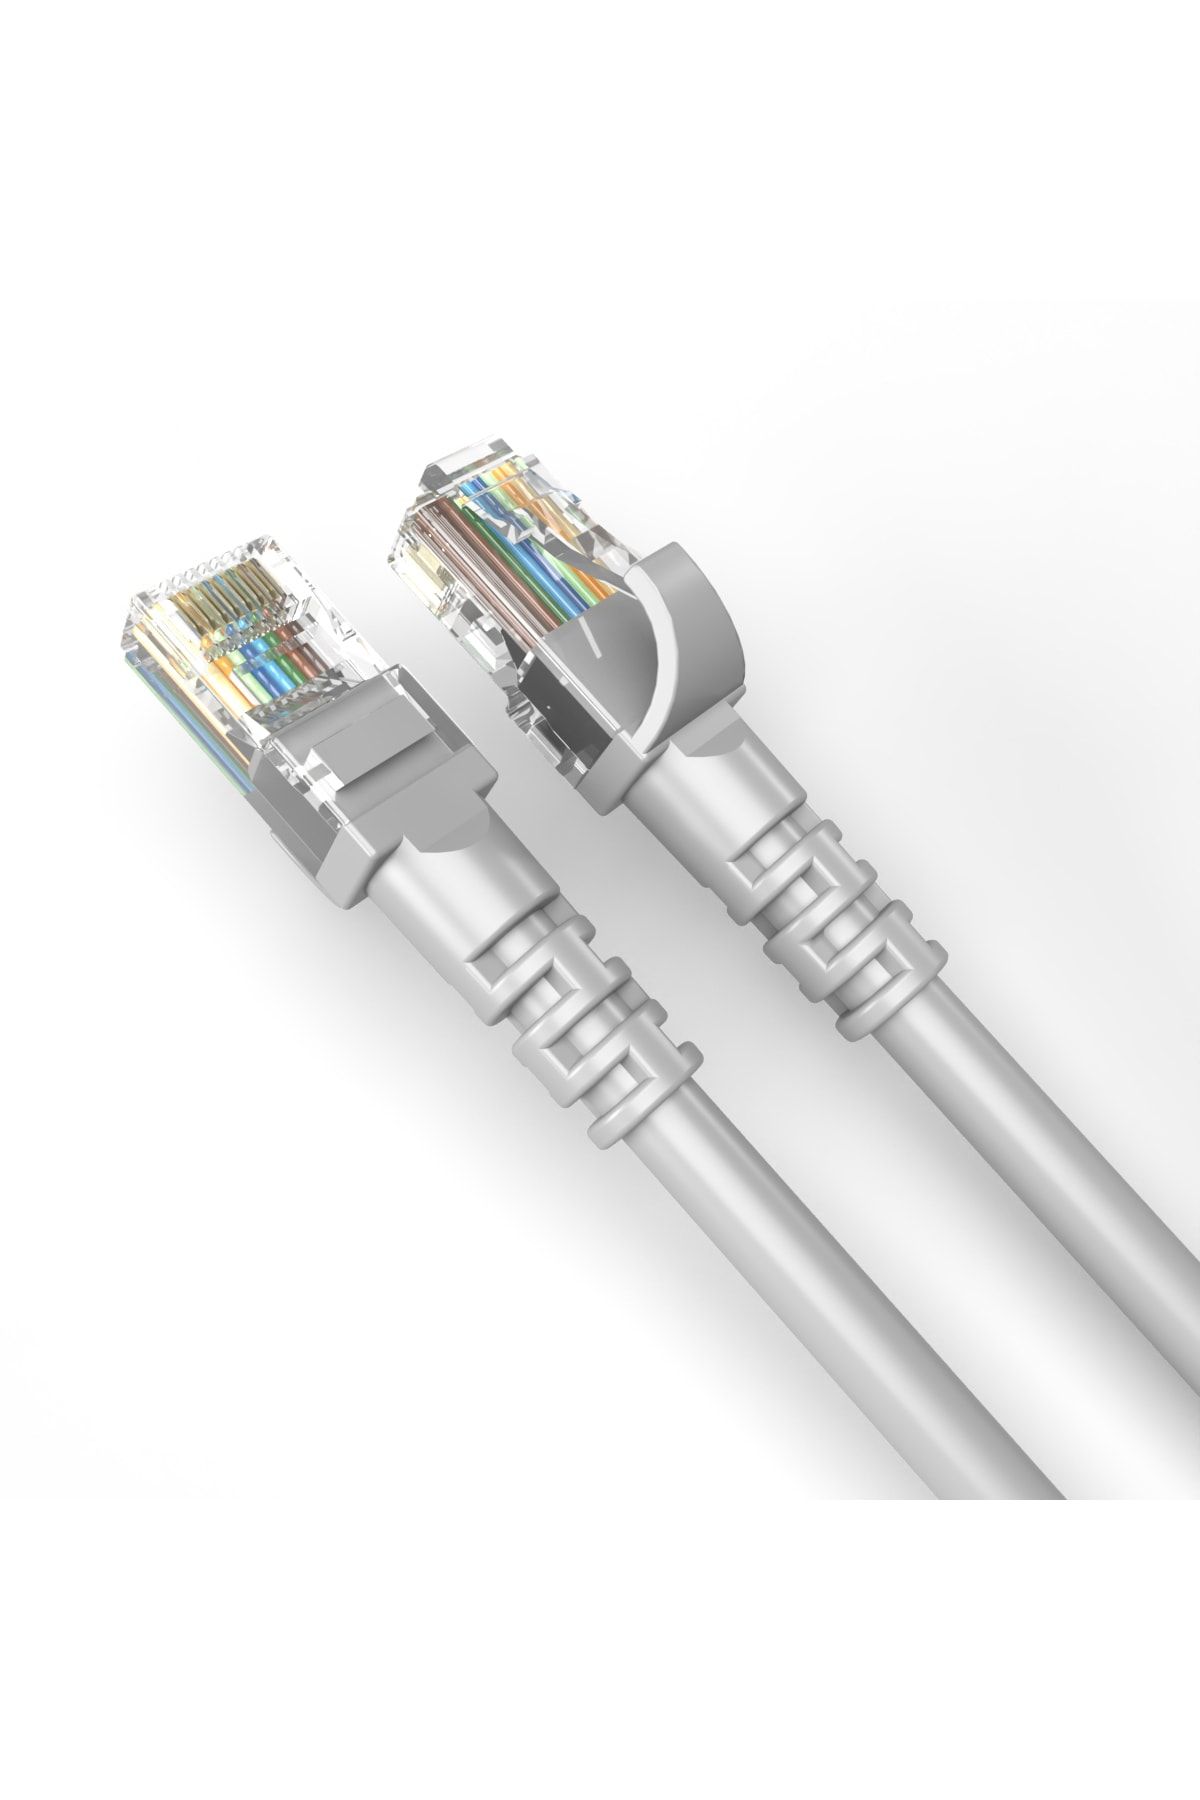 DERKAB 7 Metre Cat6 Network-Ağ-Ethernet Kablosu Gri